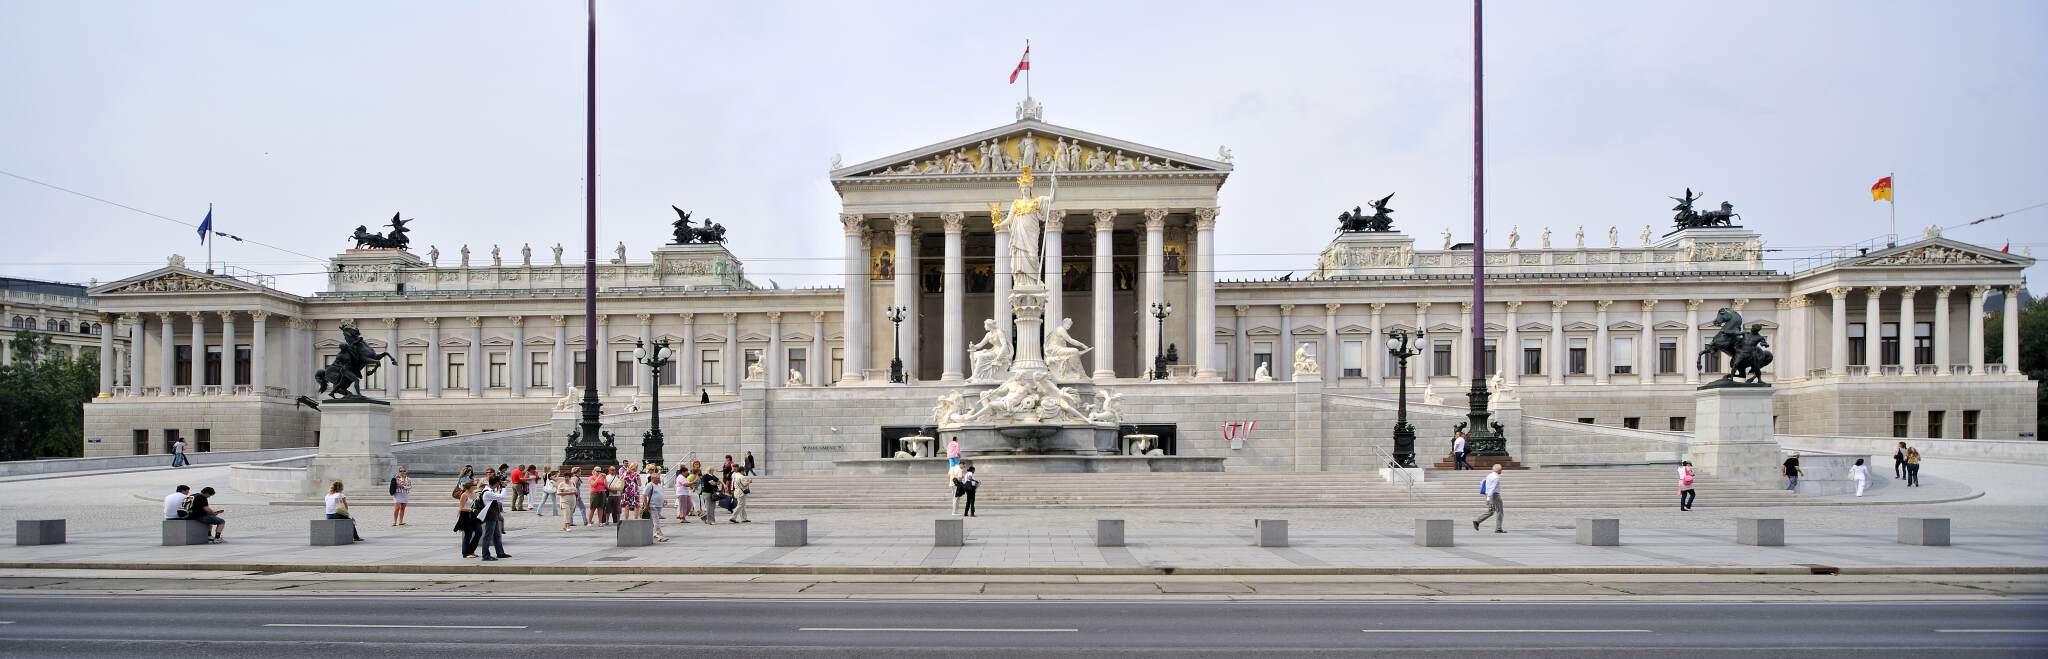 Panoramabild des Parlamentgebäudes